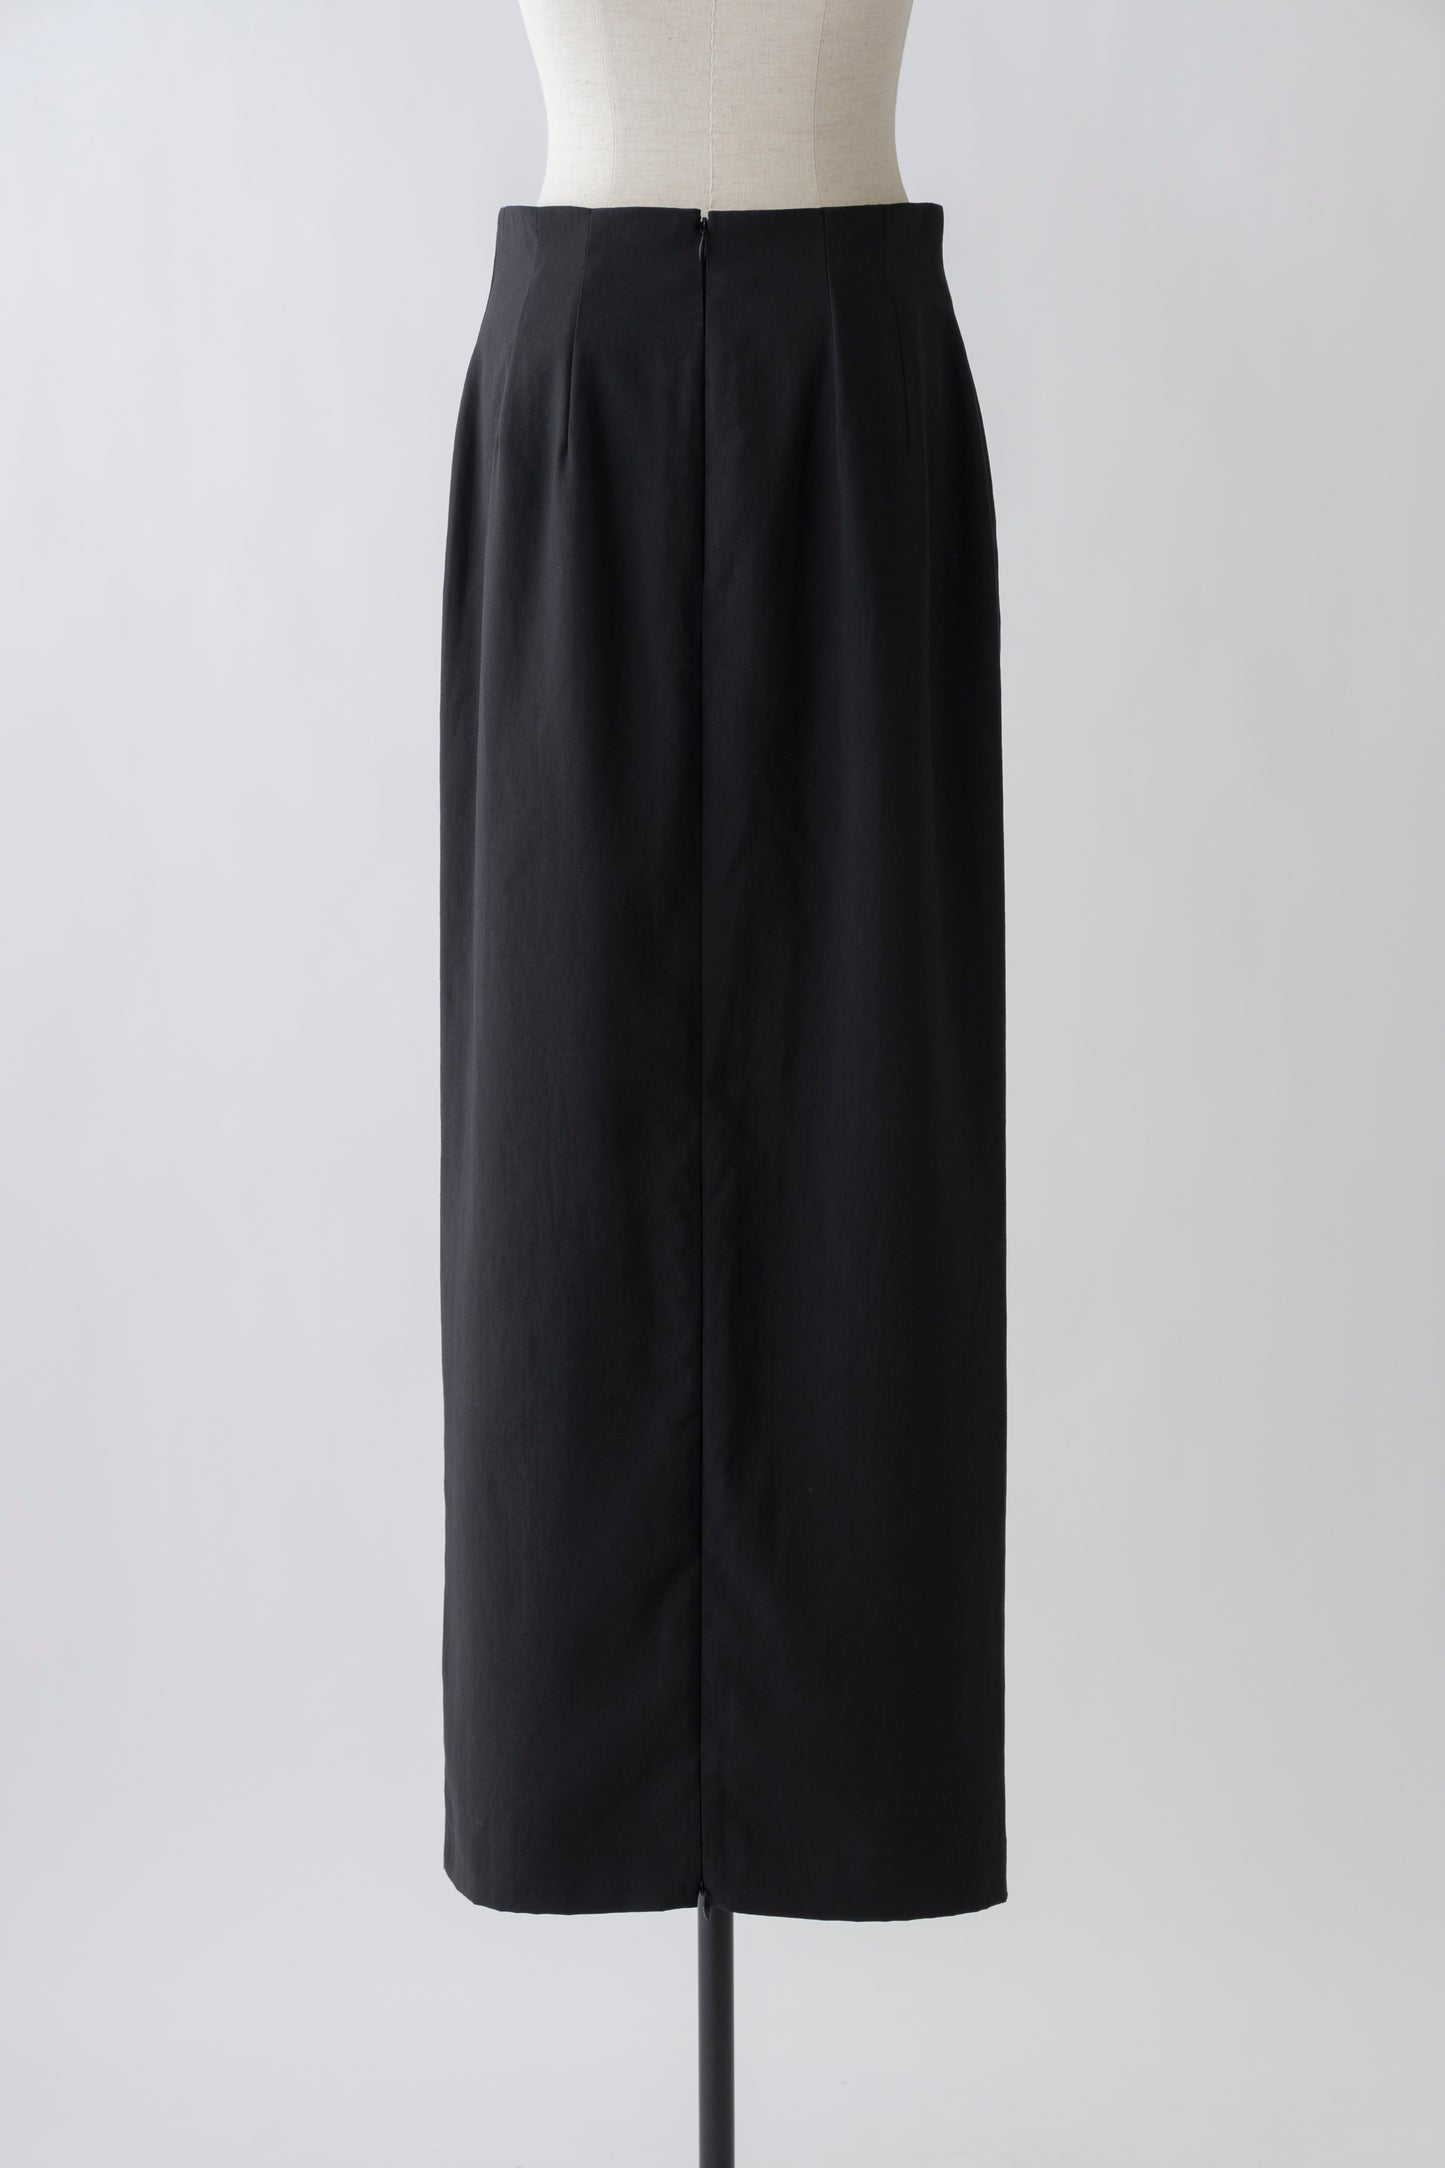 Satin tight Long skirt